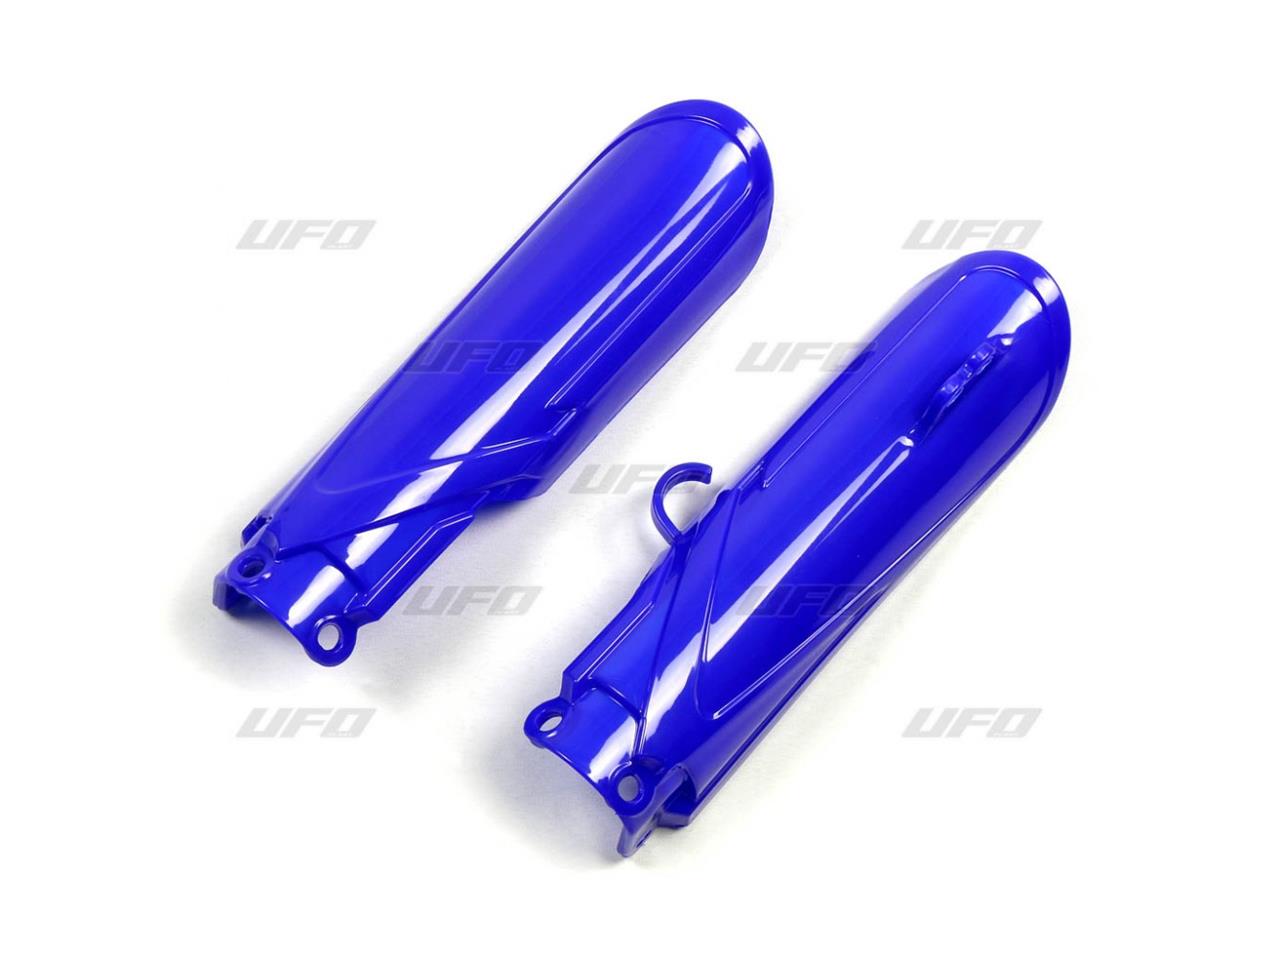 Protections de fourche marque UFO bleu